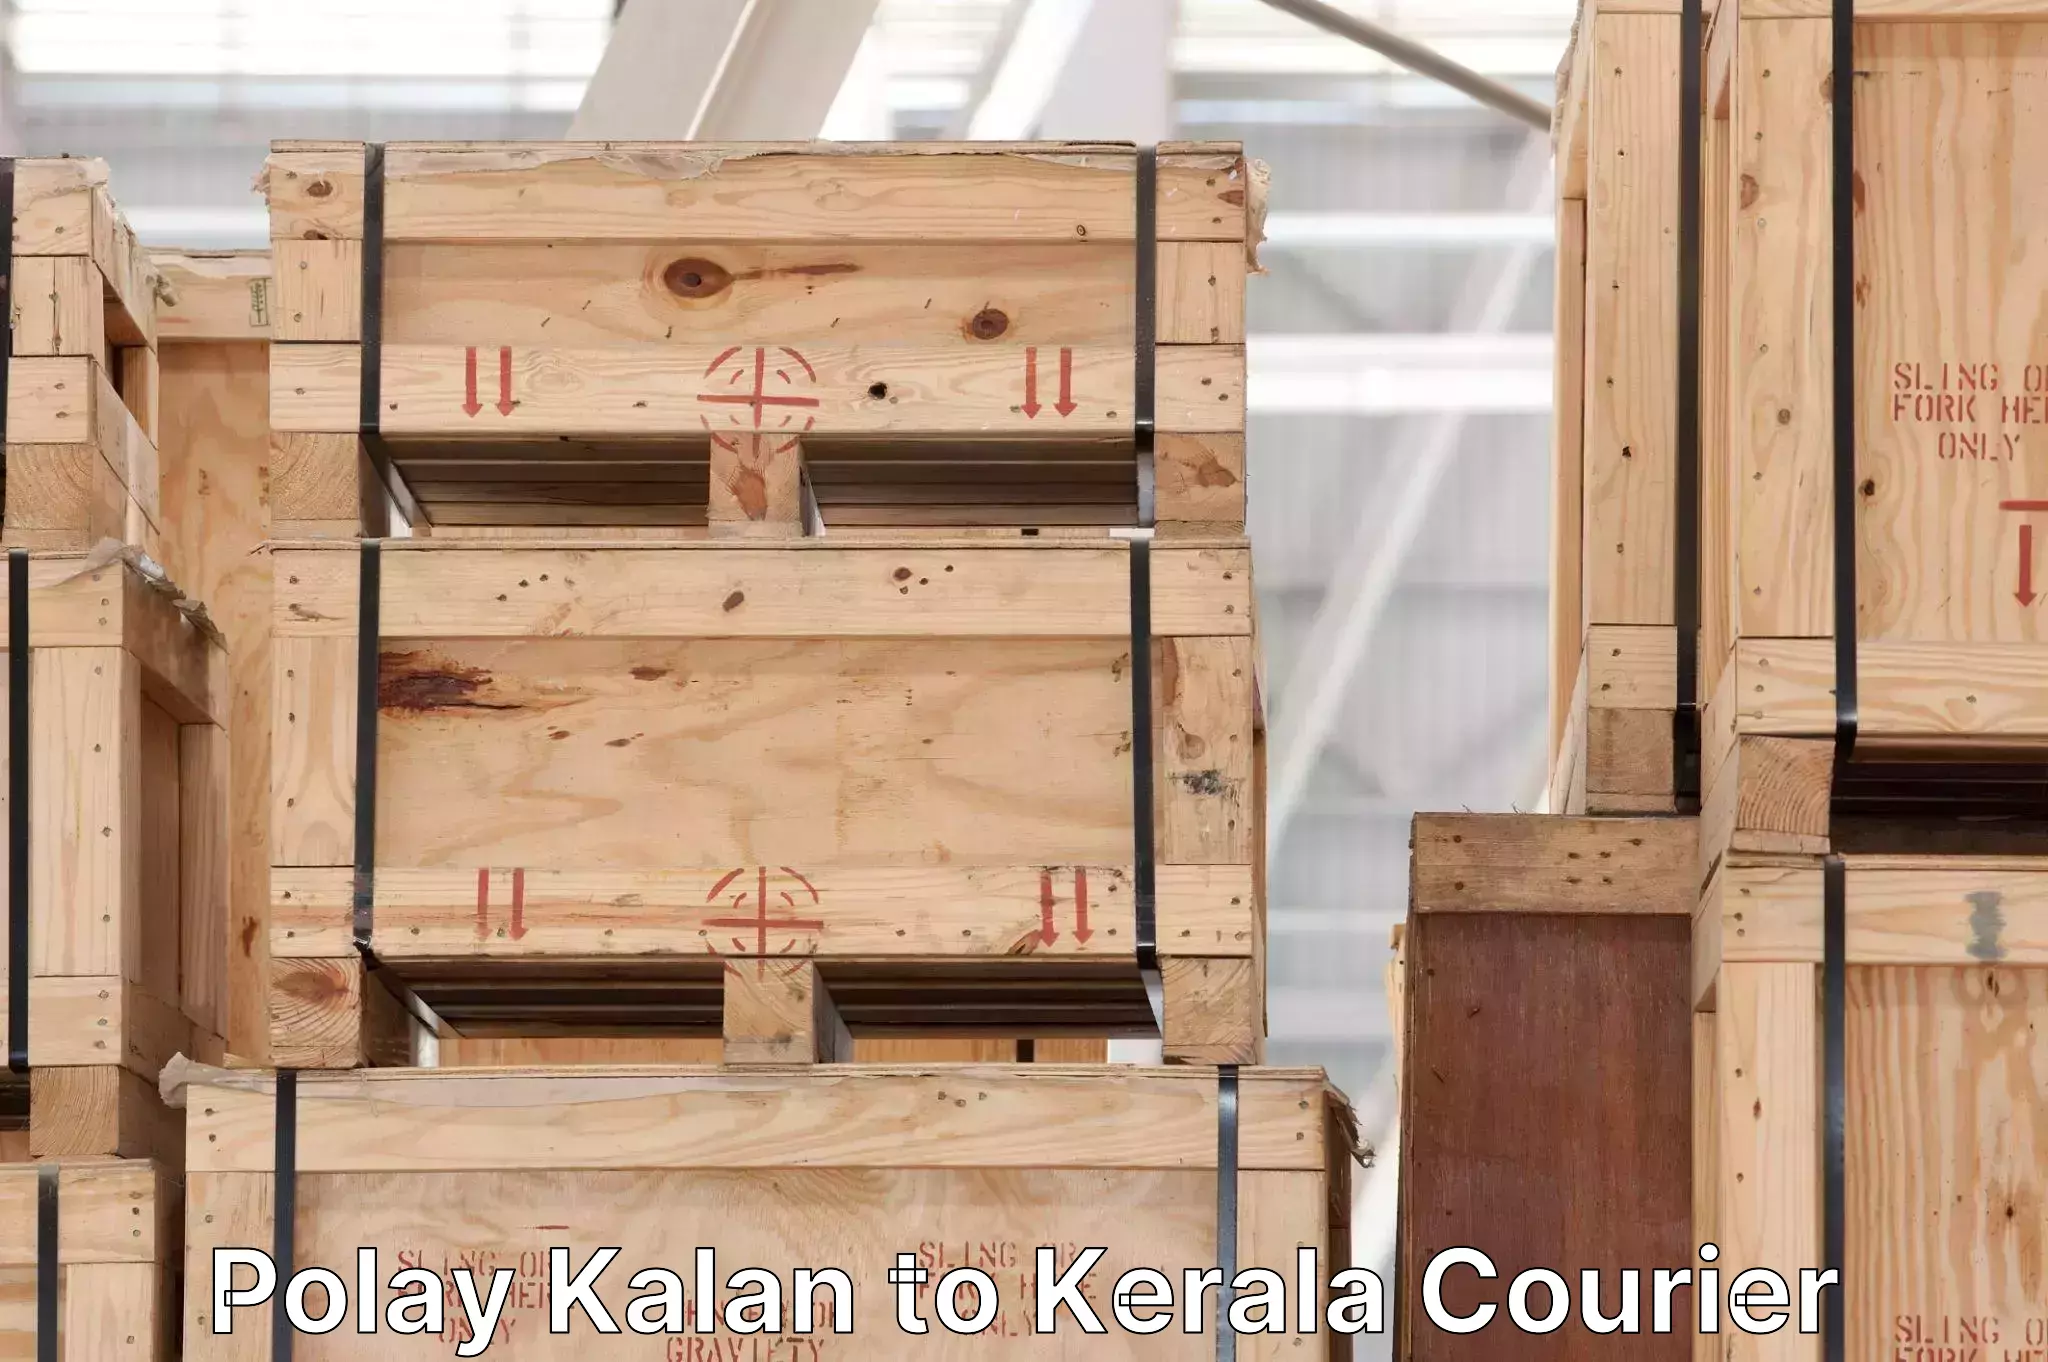 Supply chain efficiency in Polay Kalan to Kerala